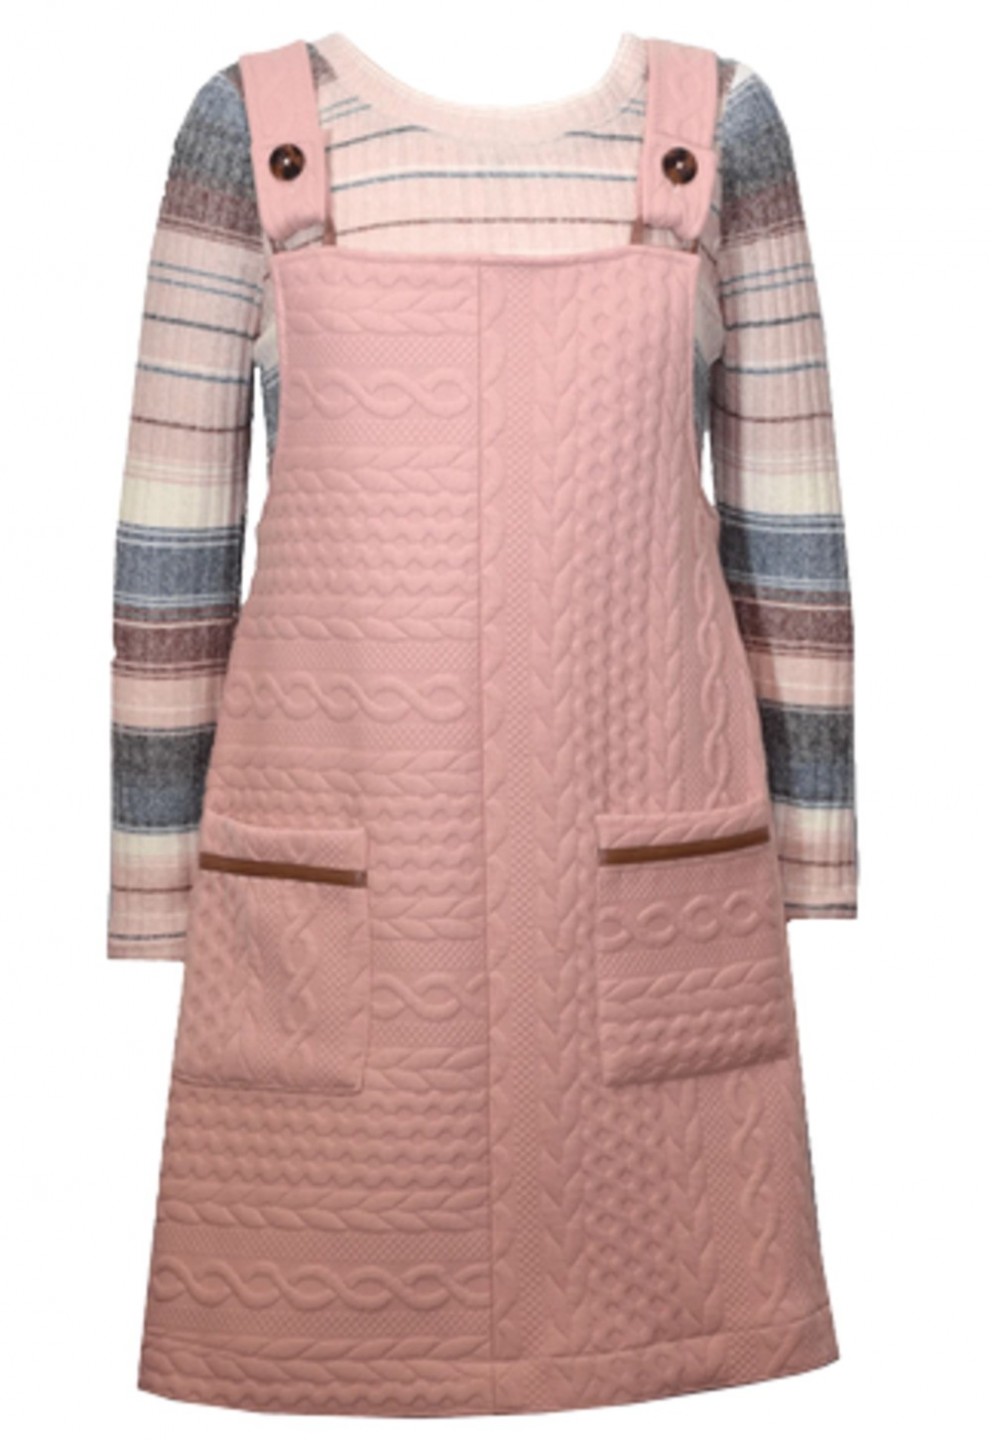 Bonnie Jean W4-10418-JL Girls Stripe Top Pink Quilted Jumper Dress Set